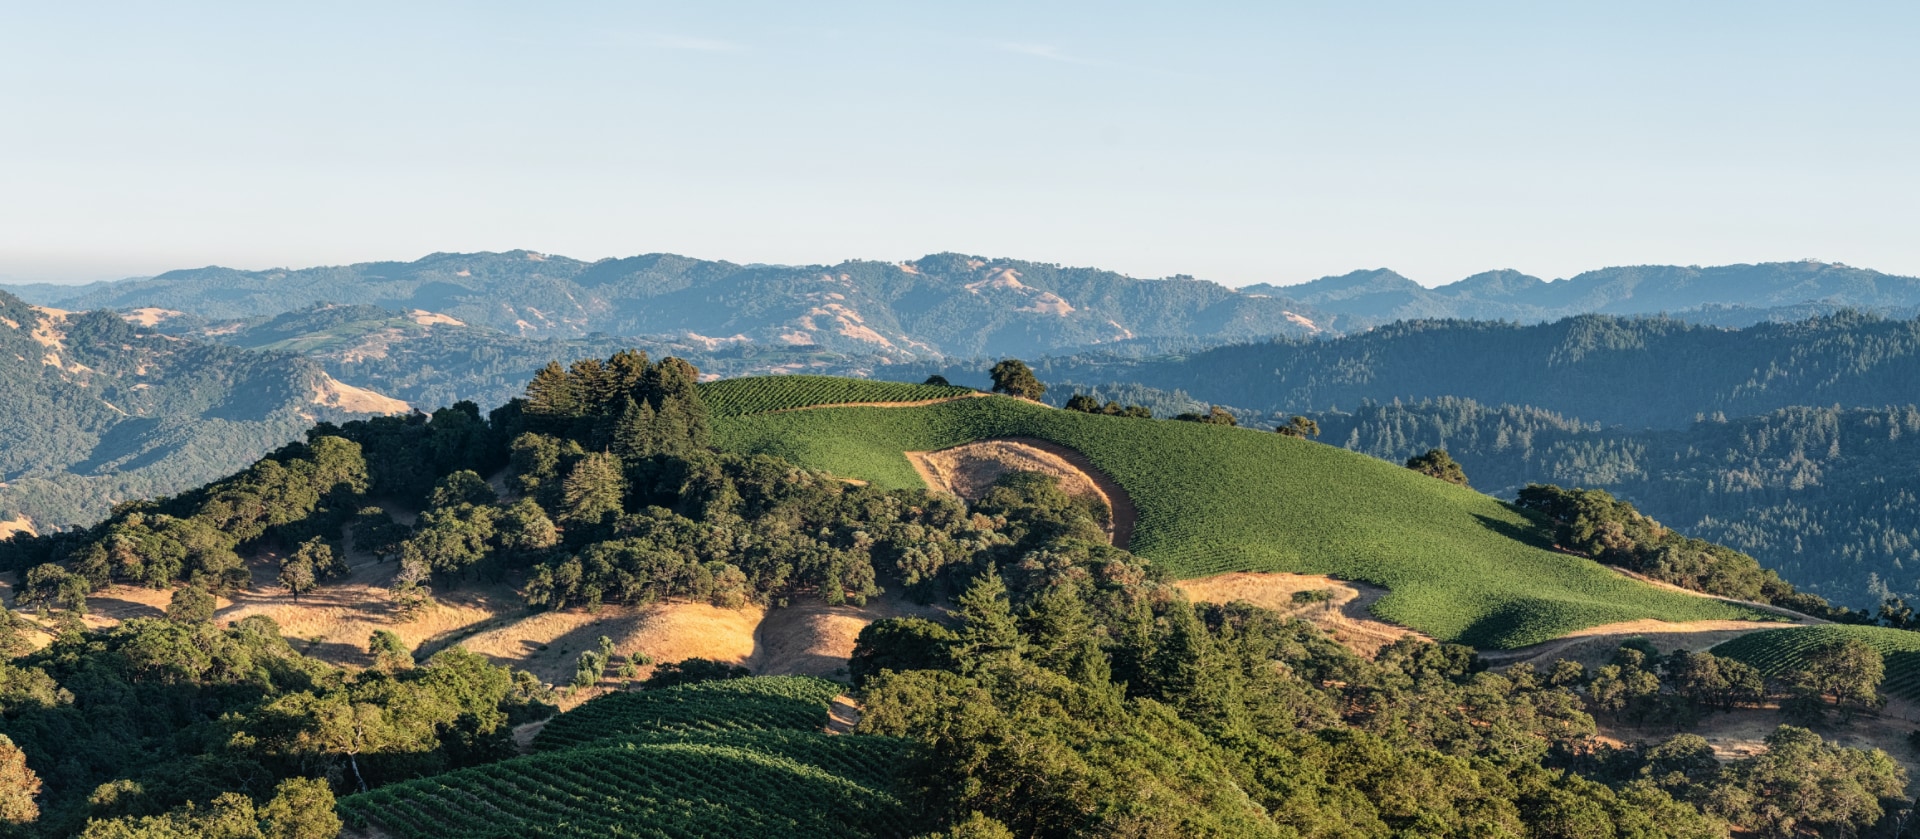 Panoramic view of vineyard